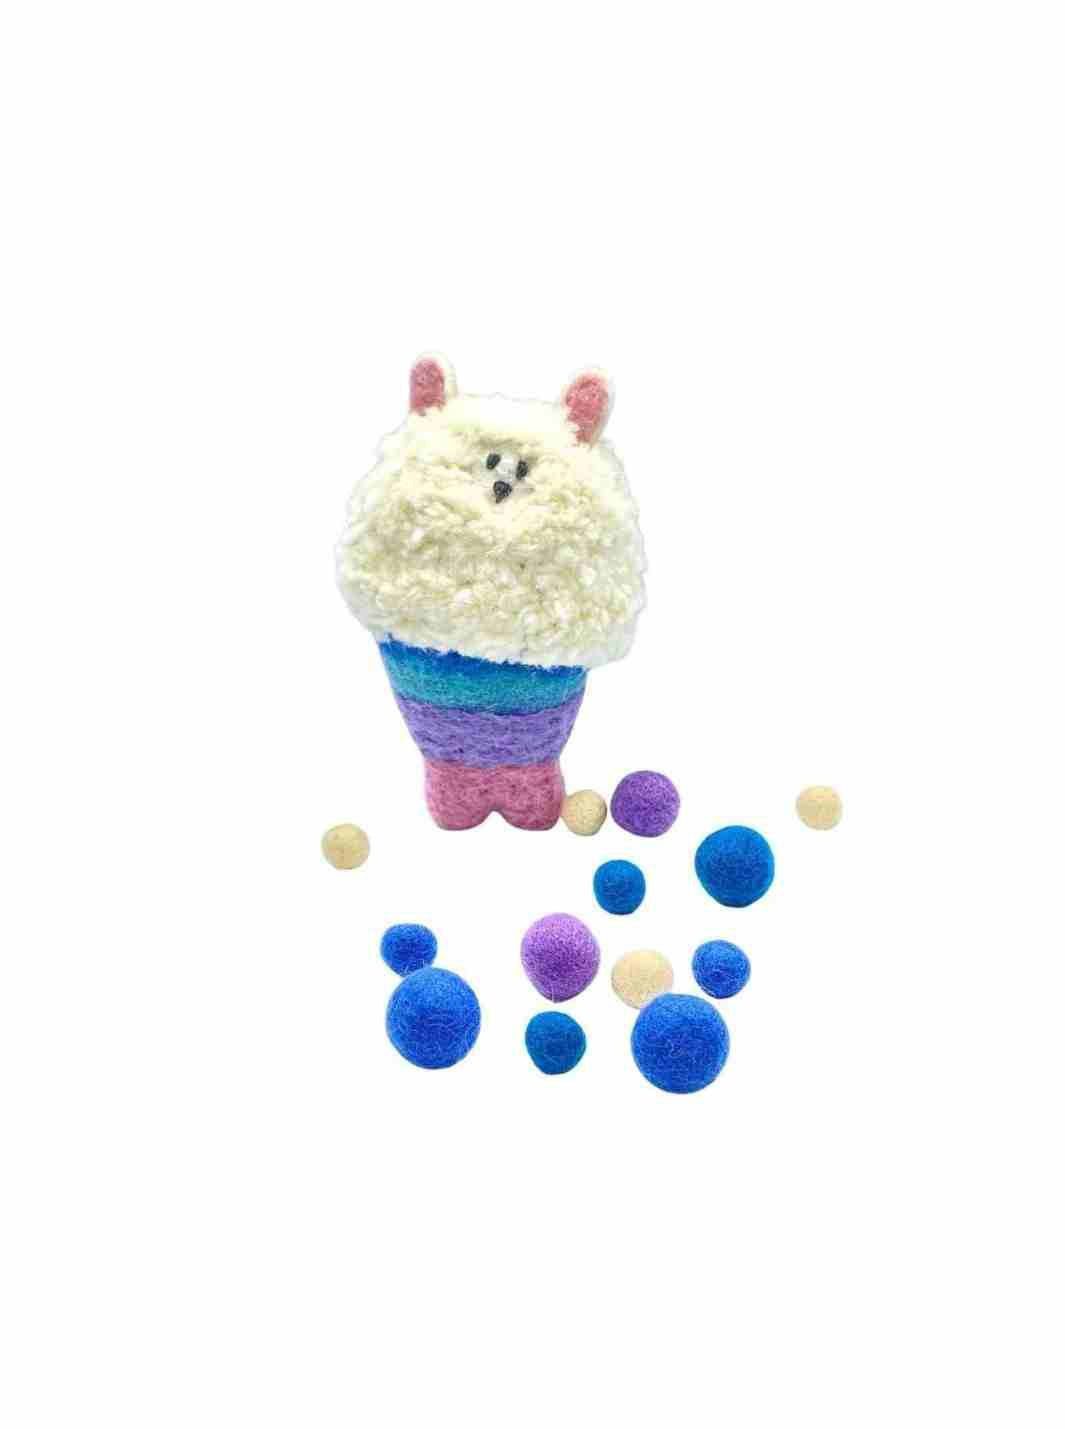 Felt Toys | Eco Cat Toys - Felt Llama Mermaid 🧜‍♀️ - Multi-Coloured | Handmade Toys | Toy Sea Animals | Eco Dog & Cat